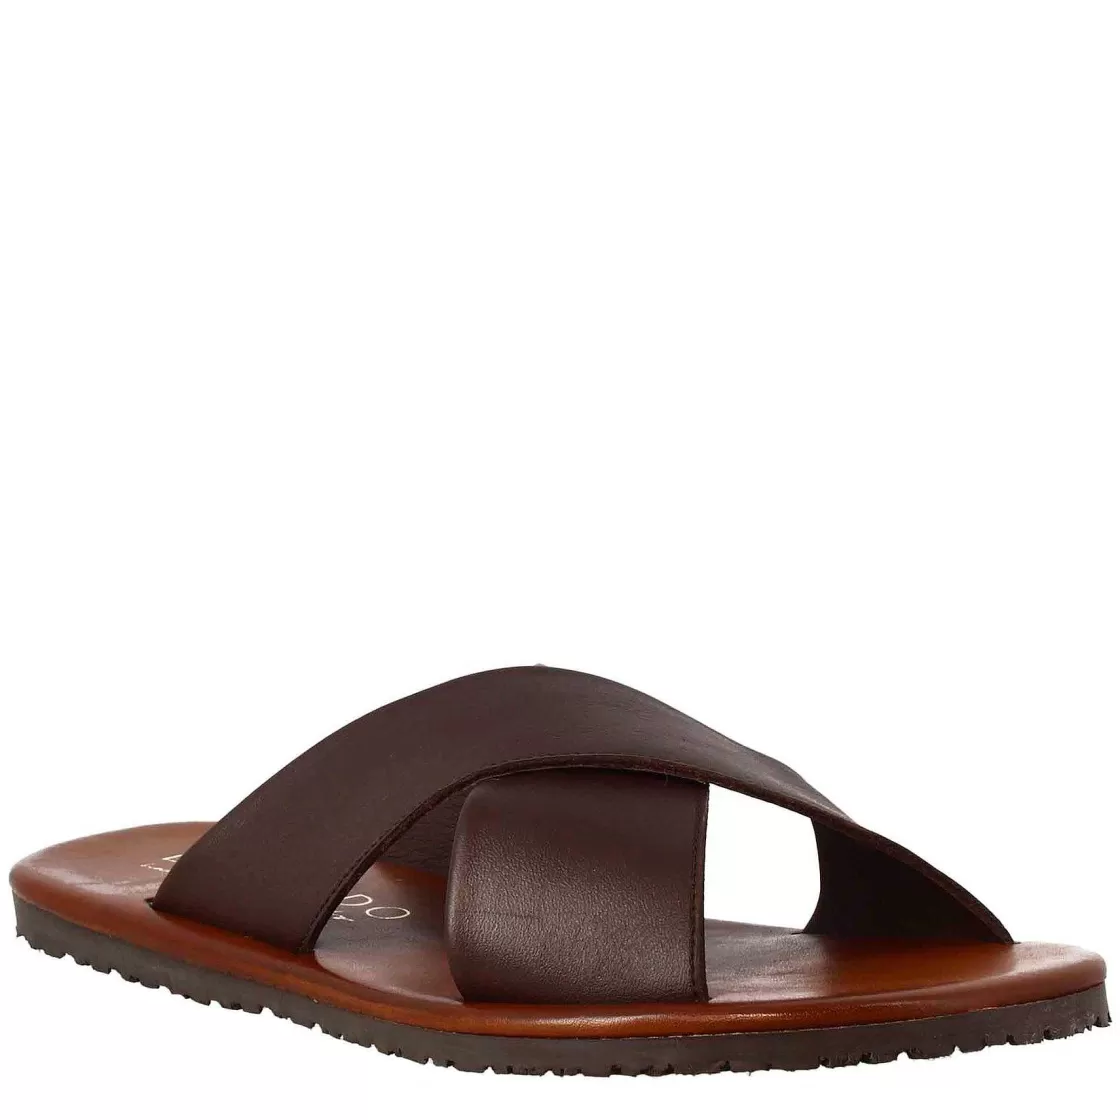 Leonardo Men'S Handmade Slipper Sandals With Crossed Bands In Brown Leather Online